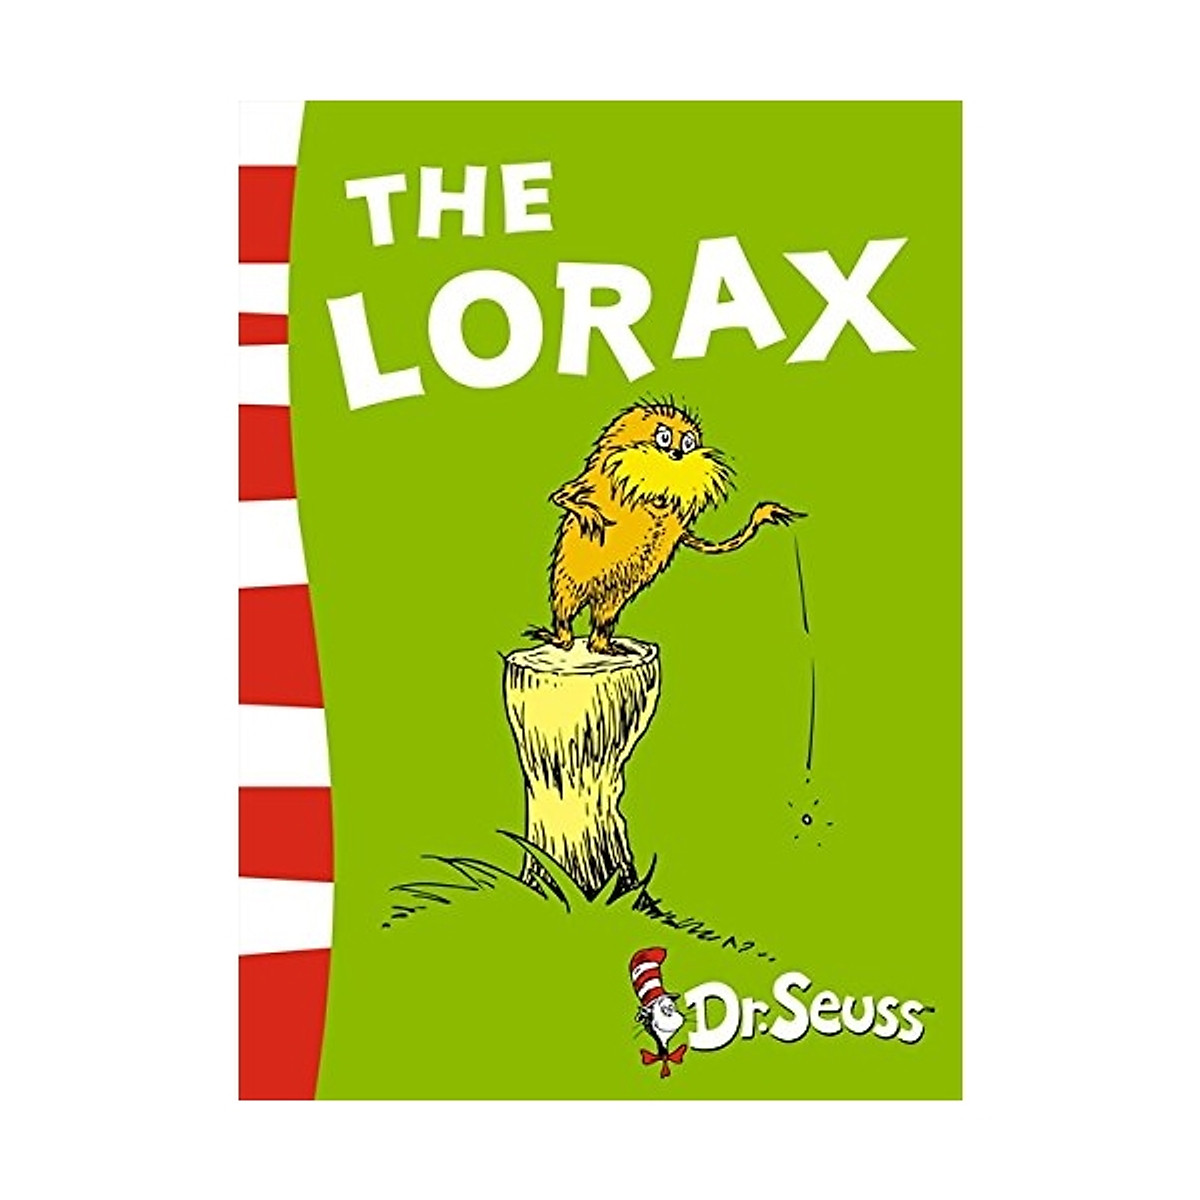 The Lorax: Dr Seuss Yellow Back Bk - Fiction - Literature